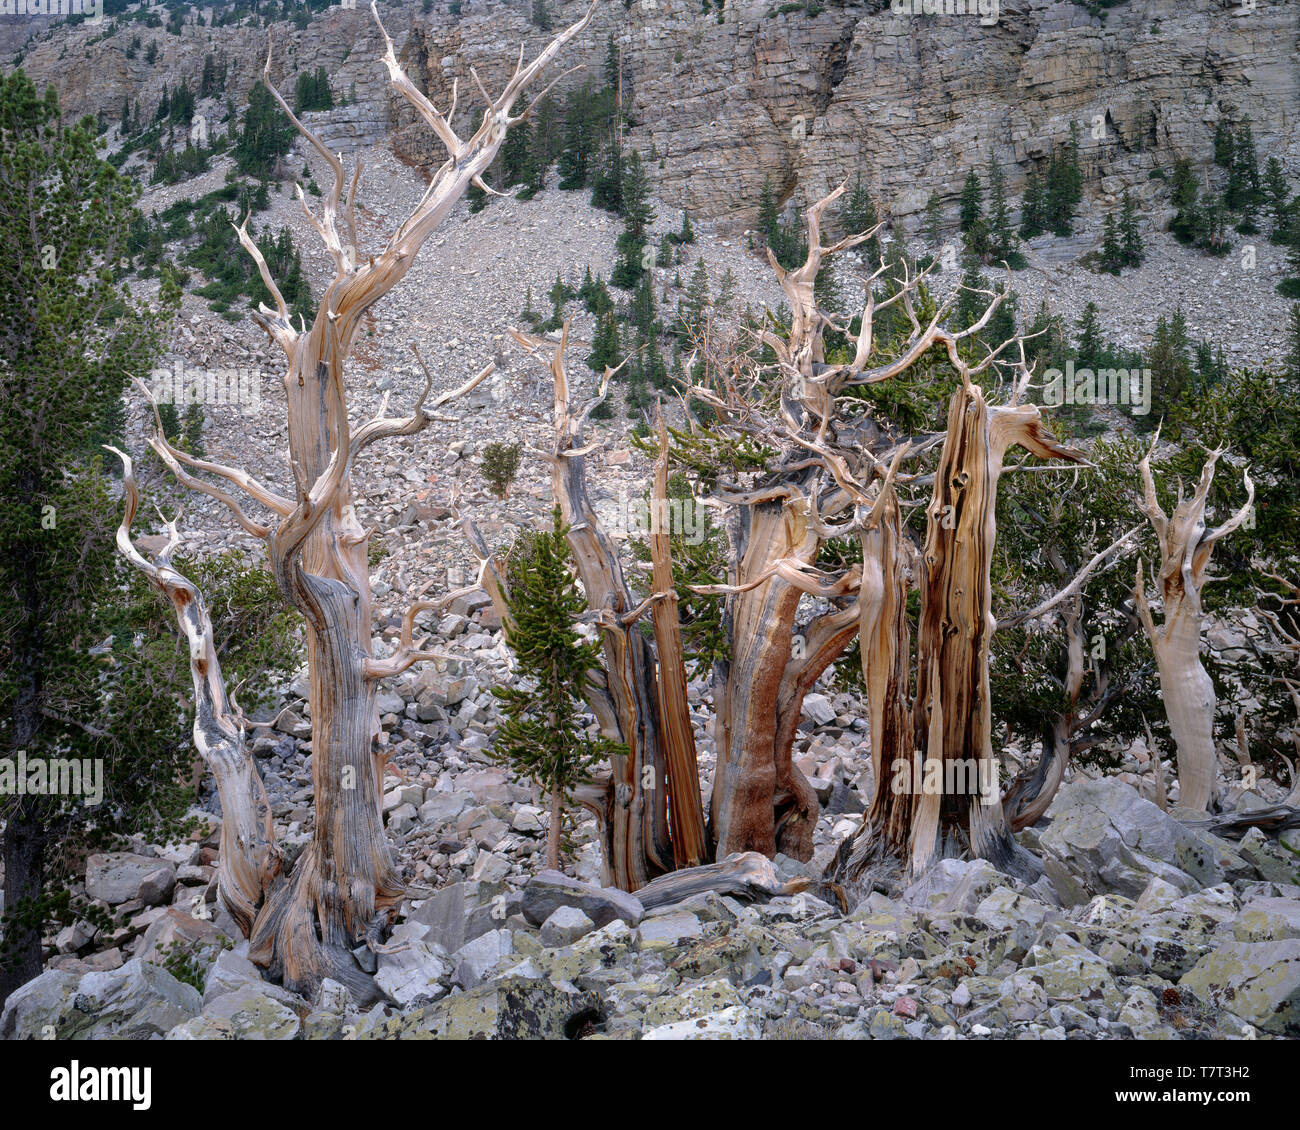 USA, Nevada, Great Basin National Park, Ancient bristlecone pine trees (Pinus longaeva) grow alongside quartzite boulders. Stock Photo